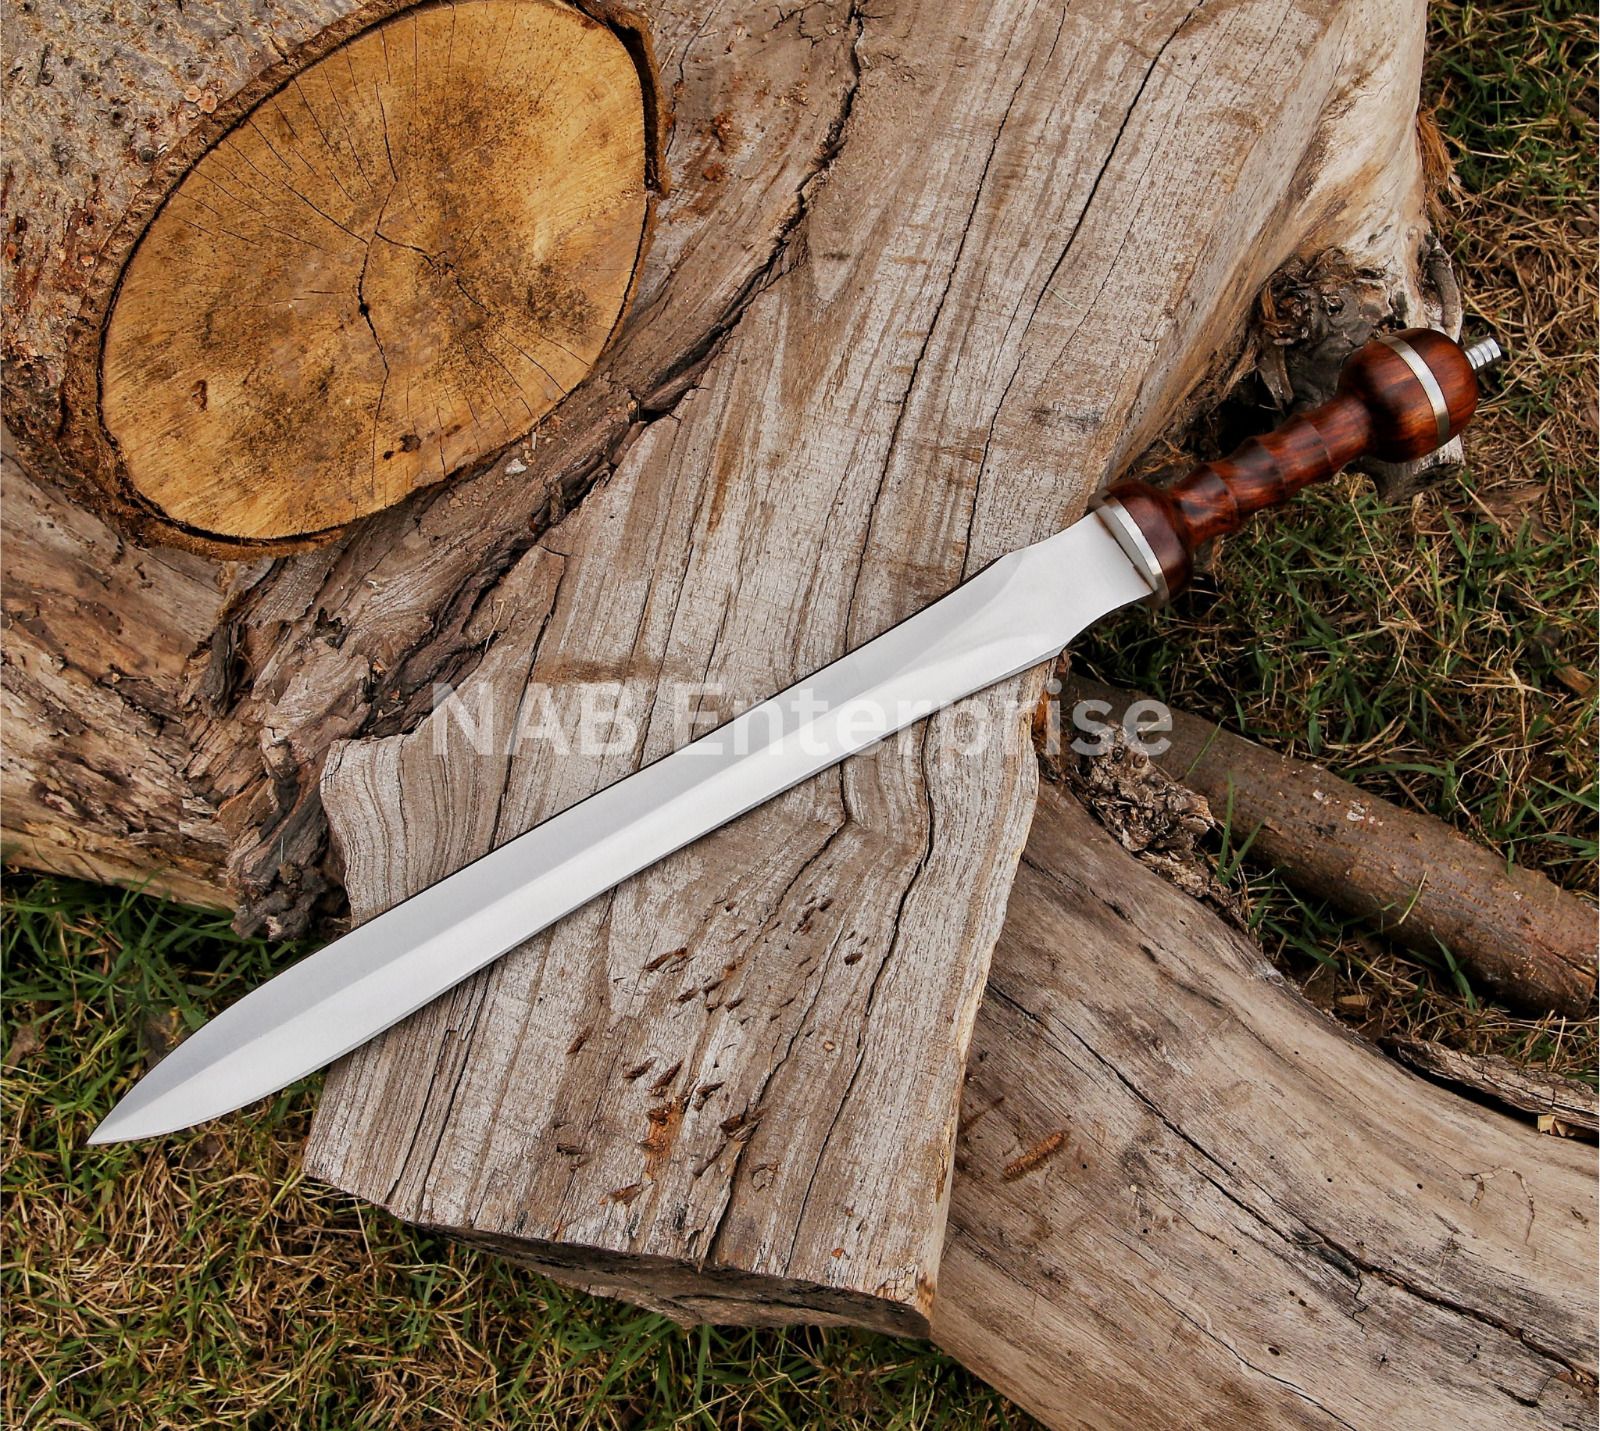 Legion Gladiator Roman Gladius Sword Hand Forged 1095 High Carbon Steel Blade 